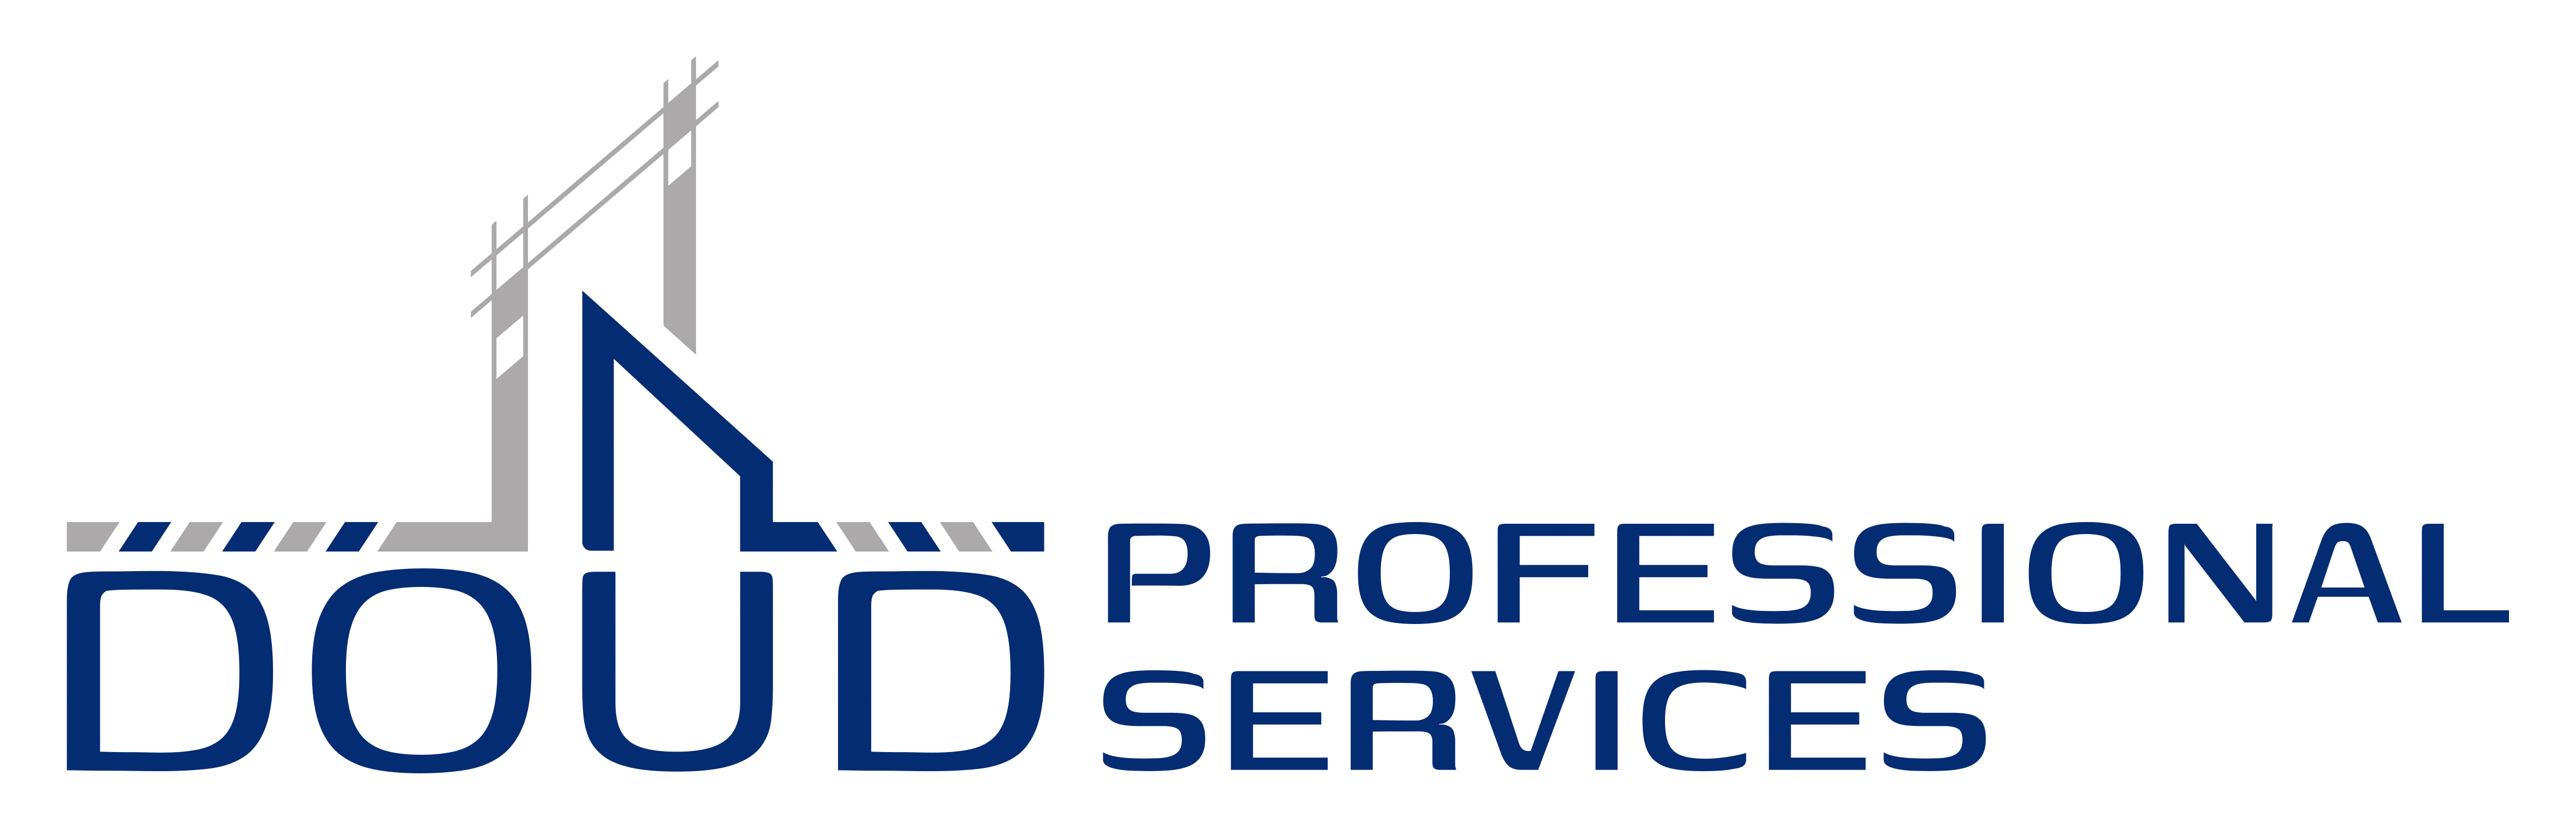 doud professional services logo